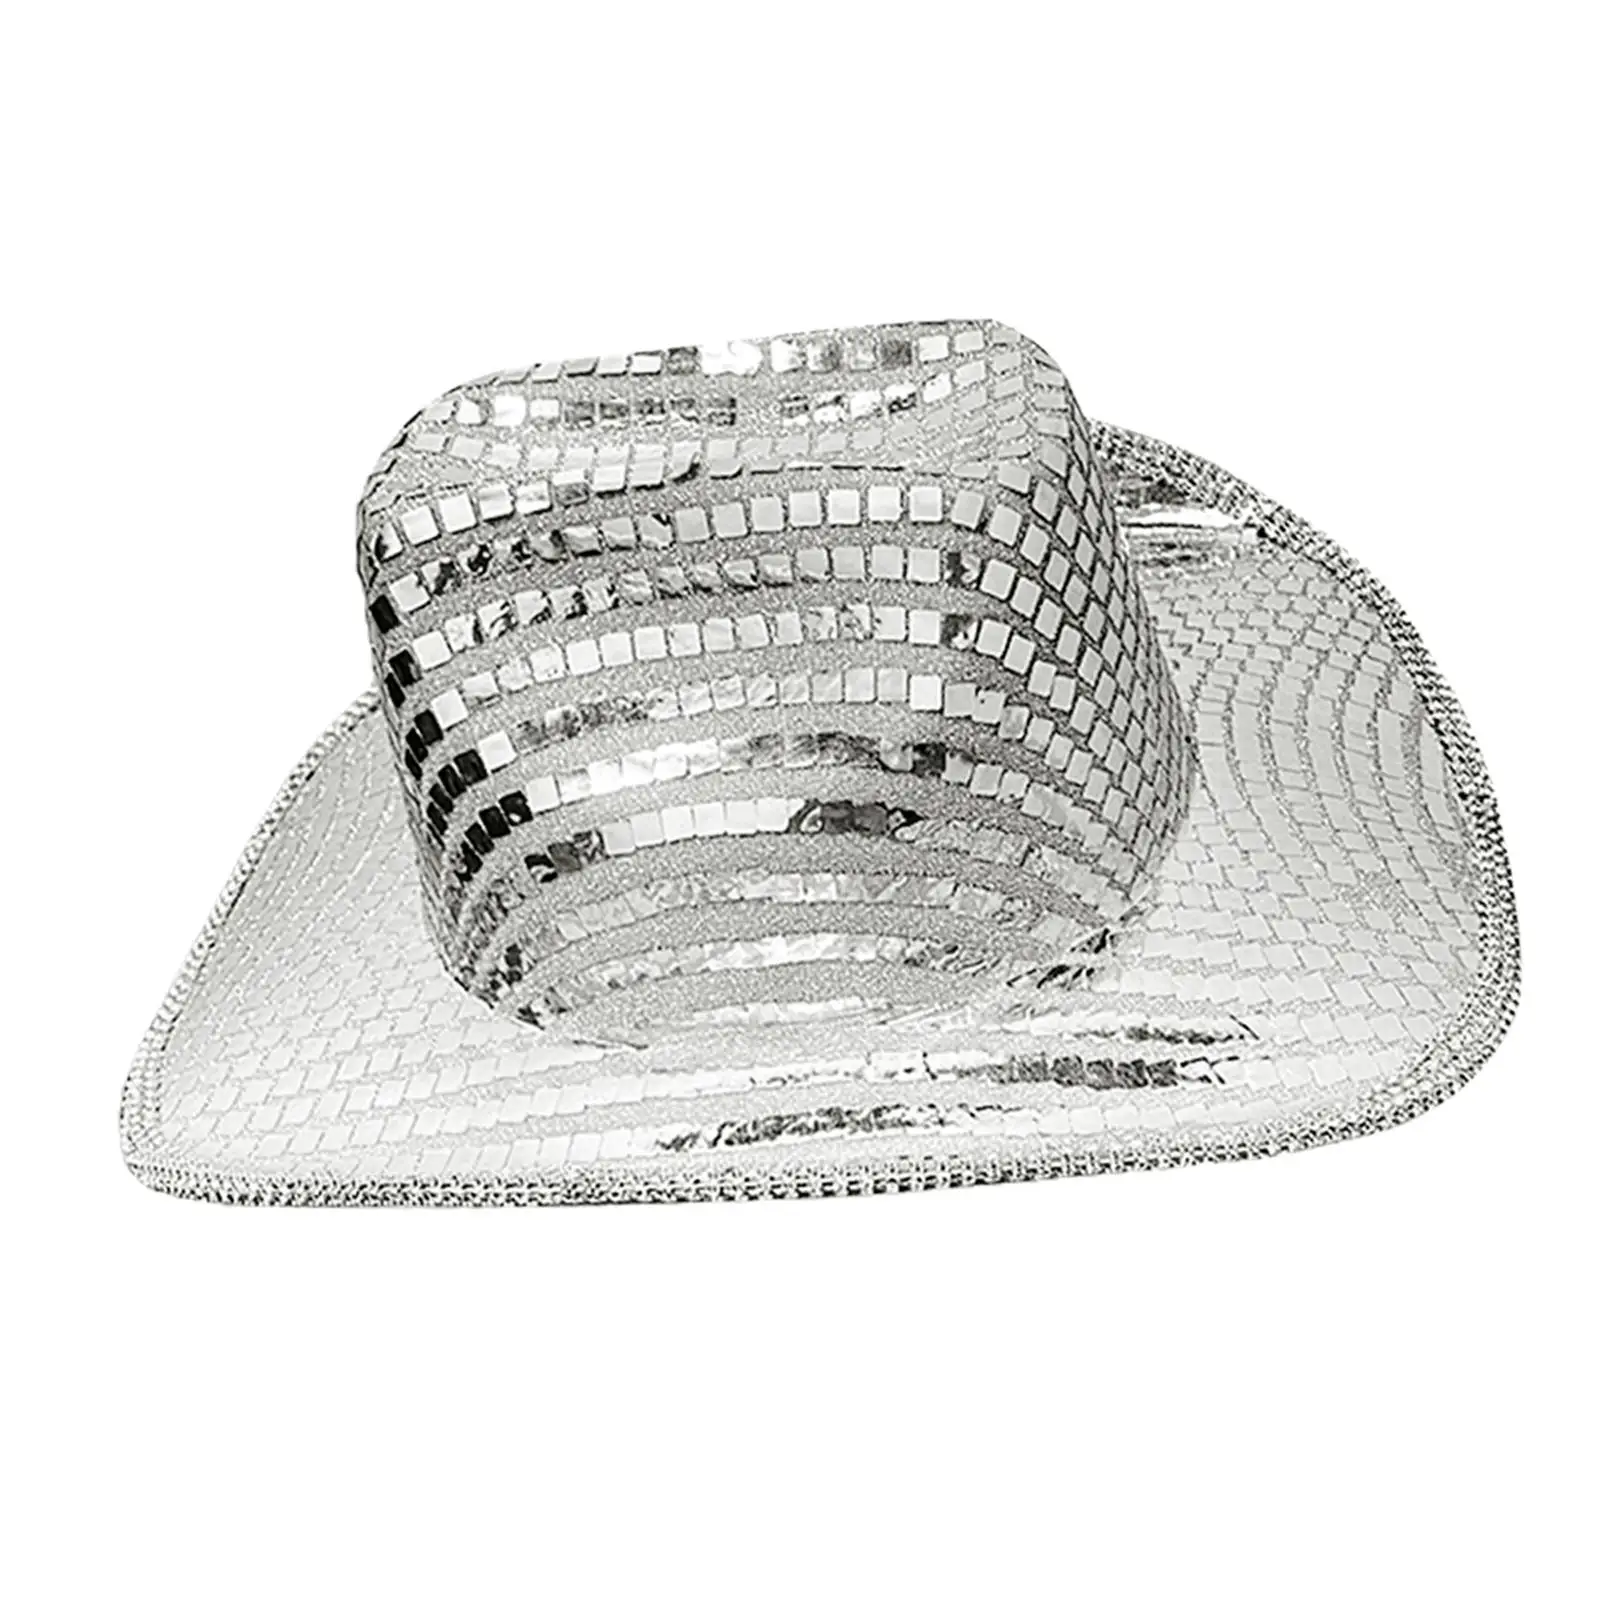 Cowgirl Hat Photo Prop Birthday Supplies Decorative Big Brim Disco Ball Hat for Girls Boys Nightclub Stage Halloween Concerts